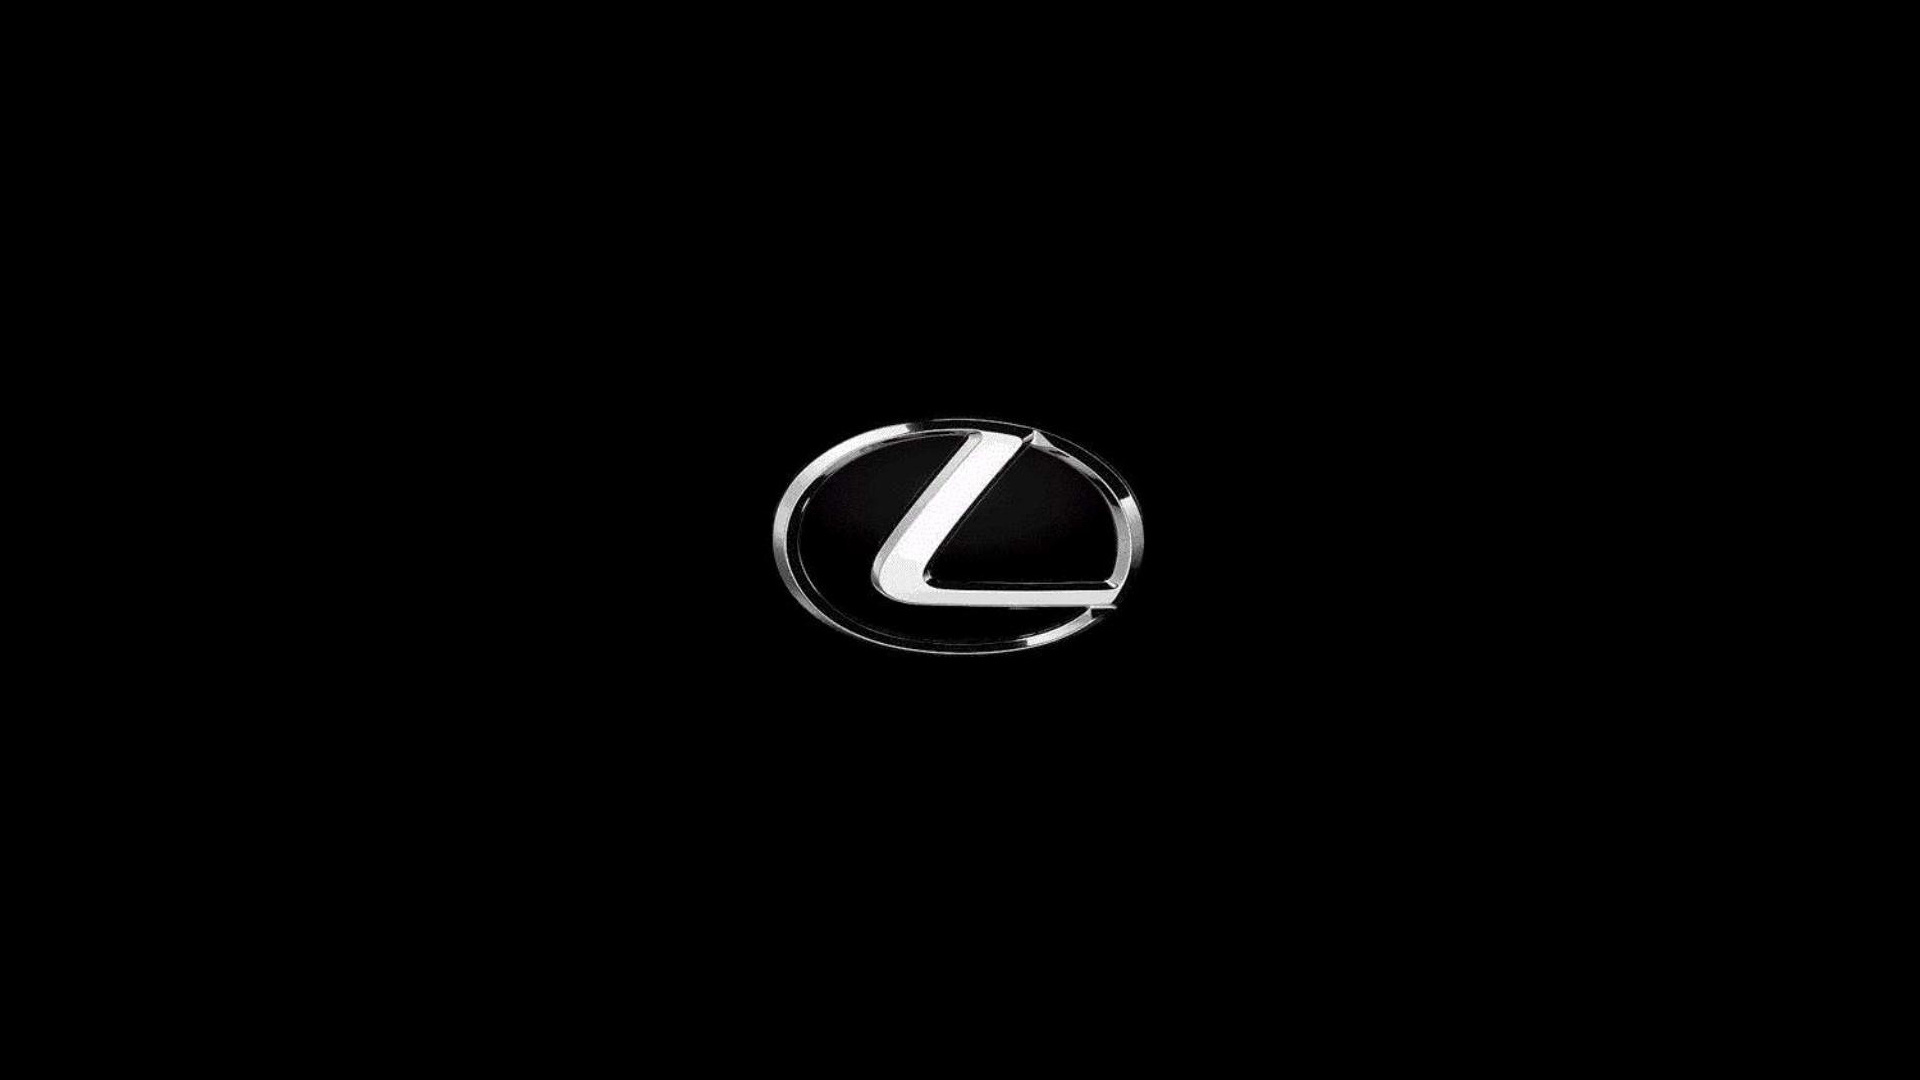 Lexus Logo Wallpaper Pictures Image